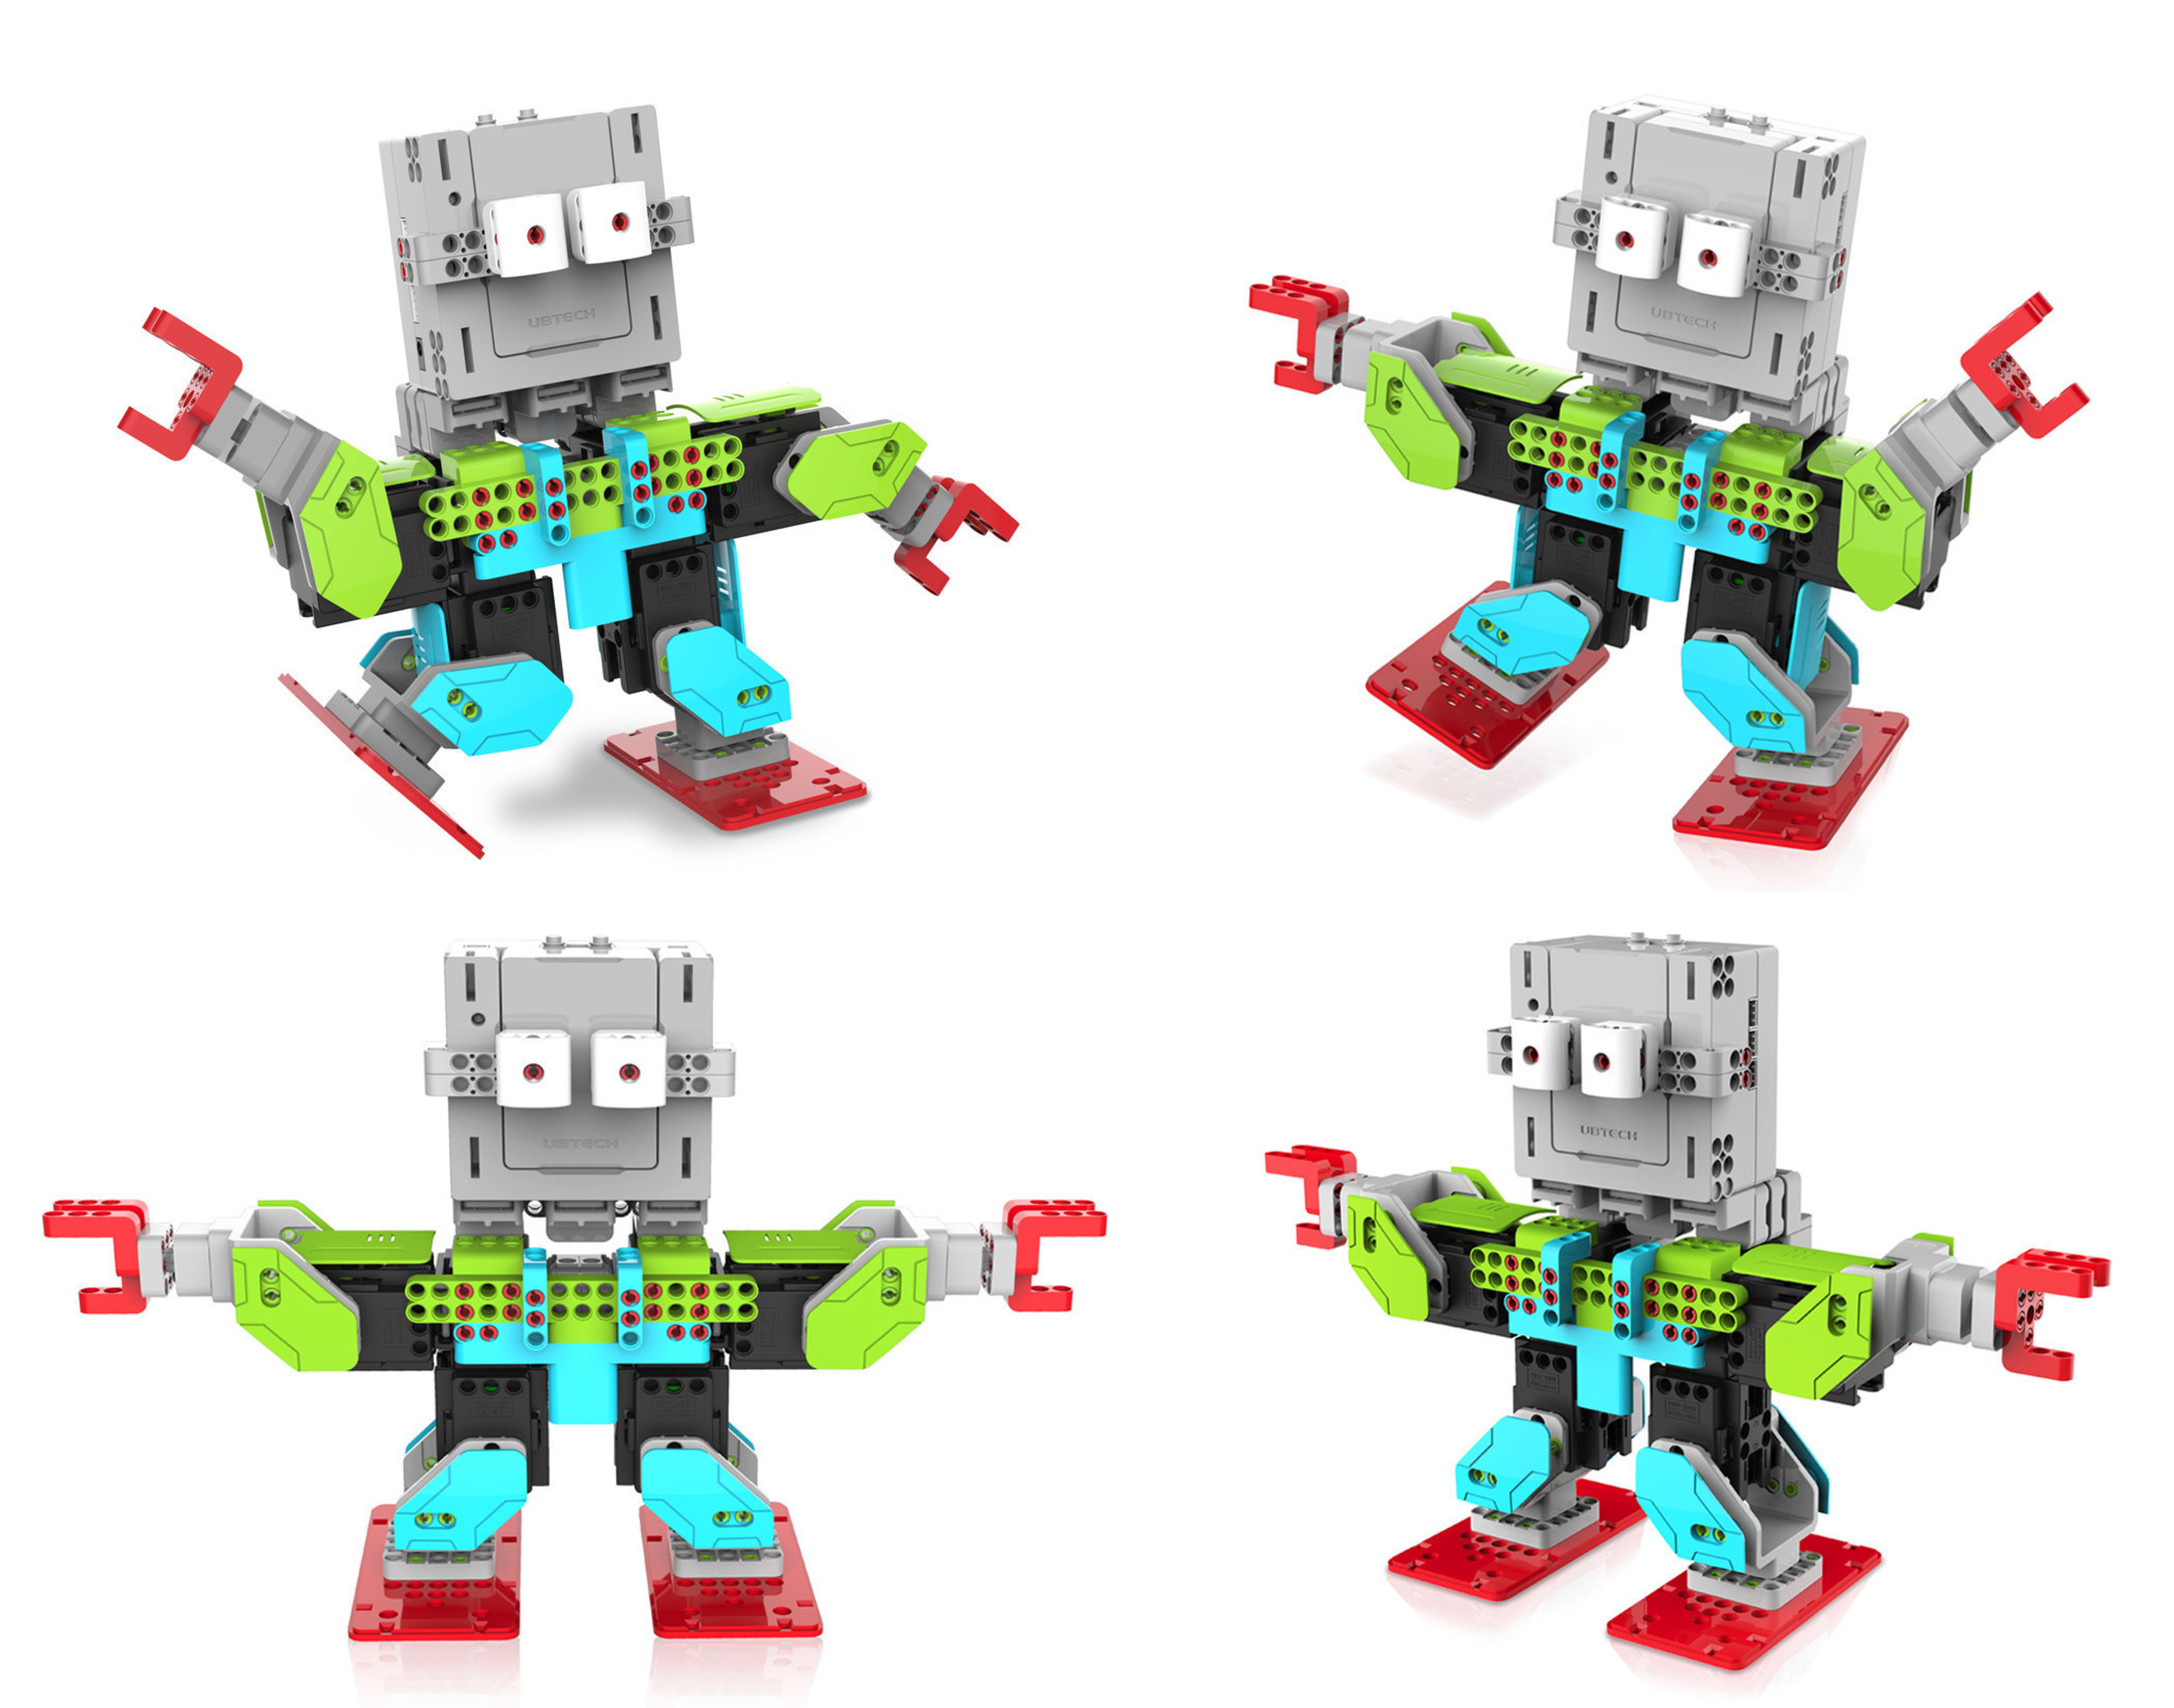 JIMU Robot - MeeBot